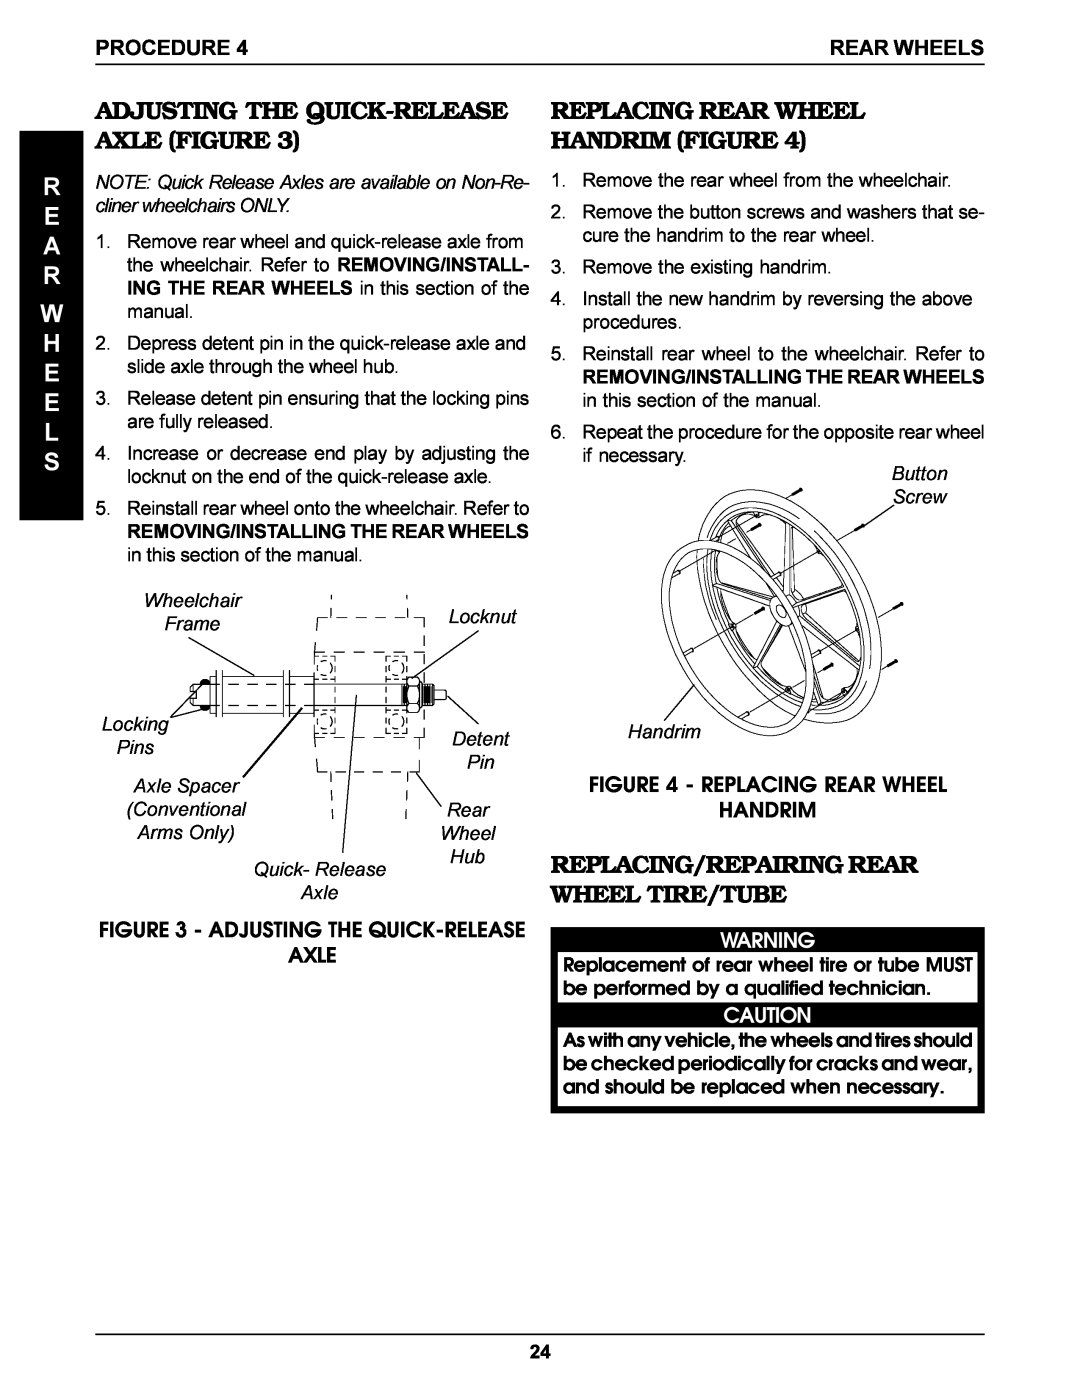 Invacare Tracer DLX, SX R E A R W H E E L S, Replacing Rear Wheel Handrim Figure, Replacing/Repairing Rear Wheel Tire/Tube 